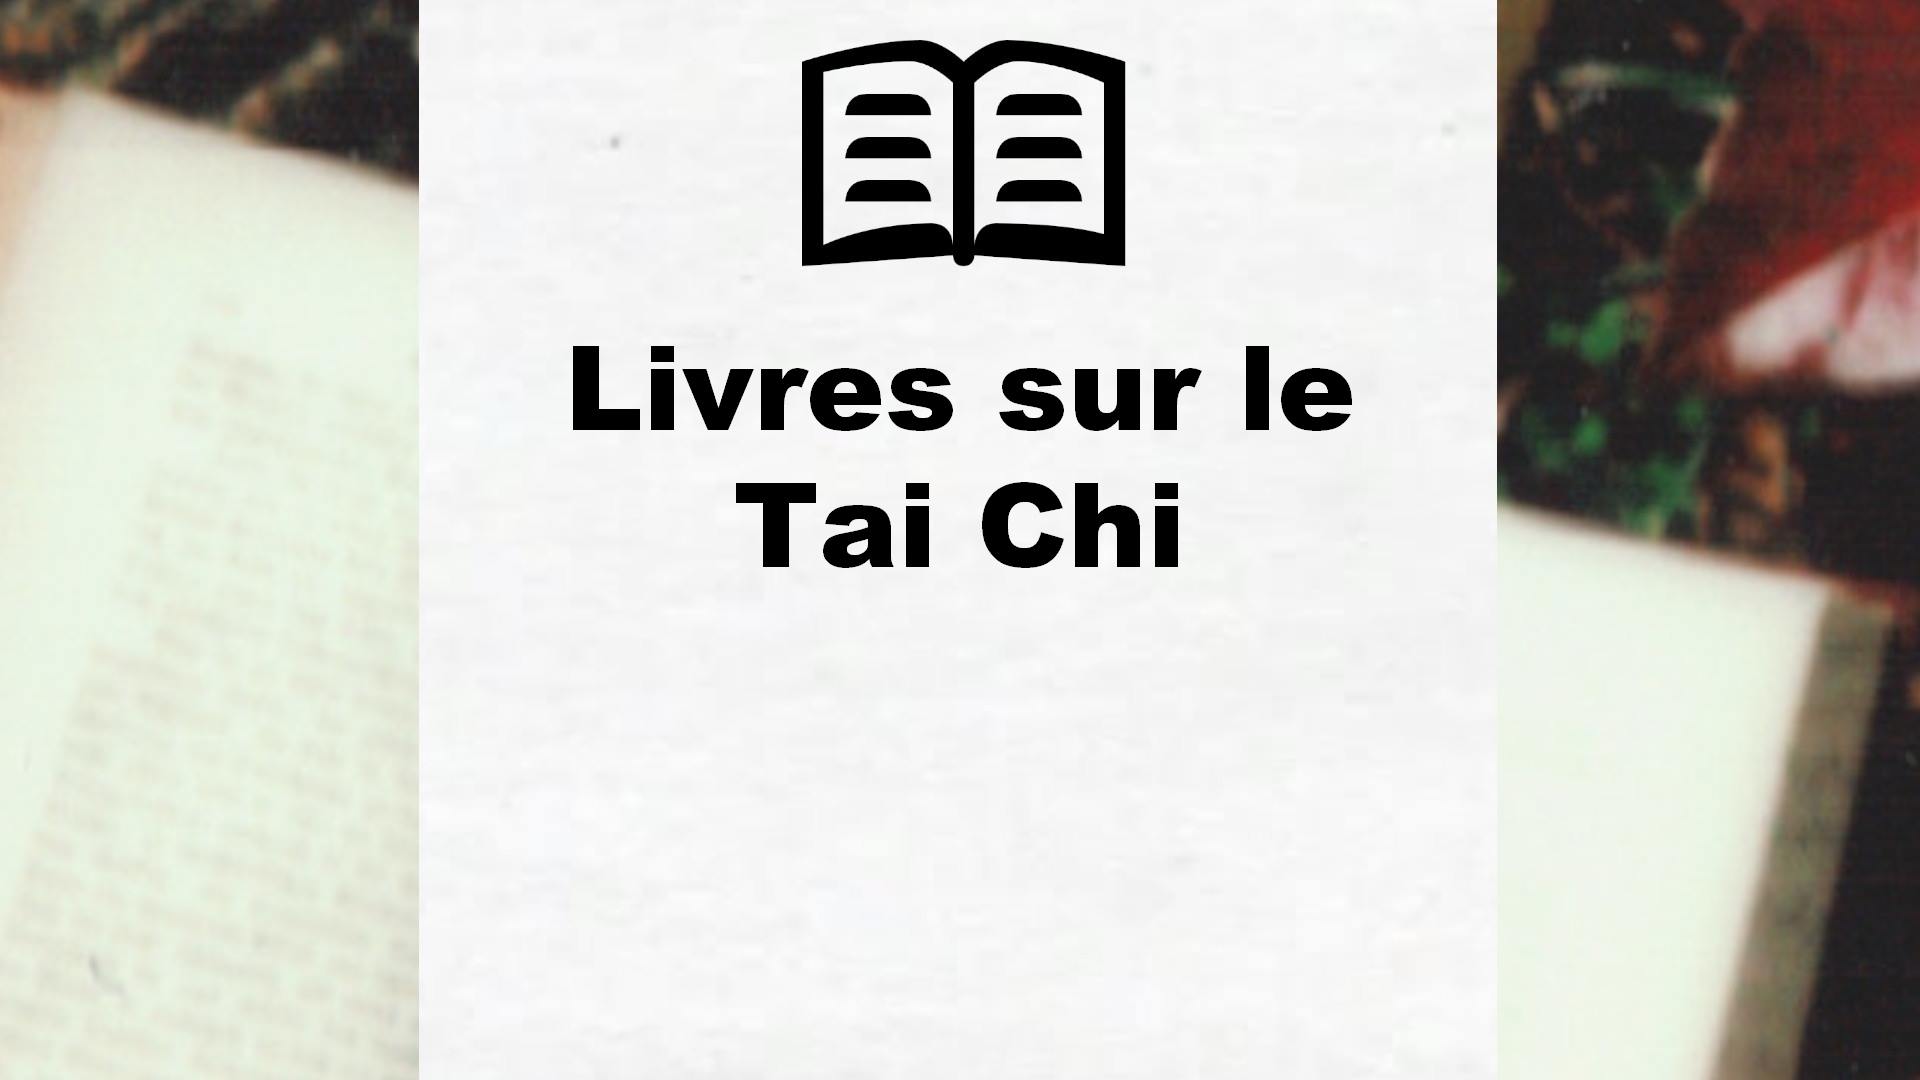 Livres sur le Tai Chi